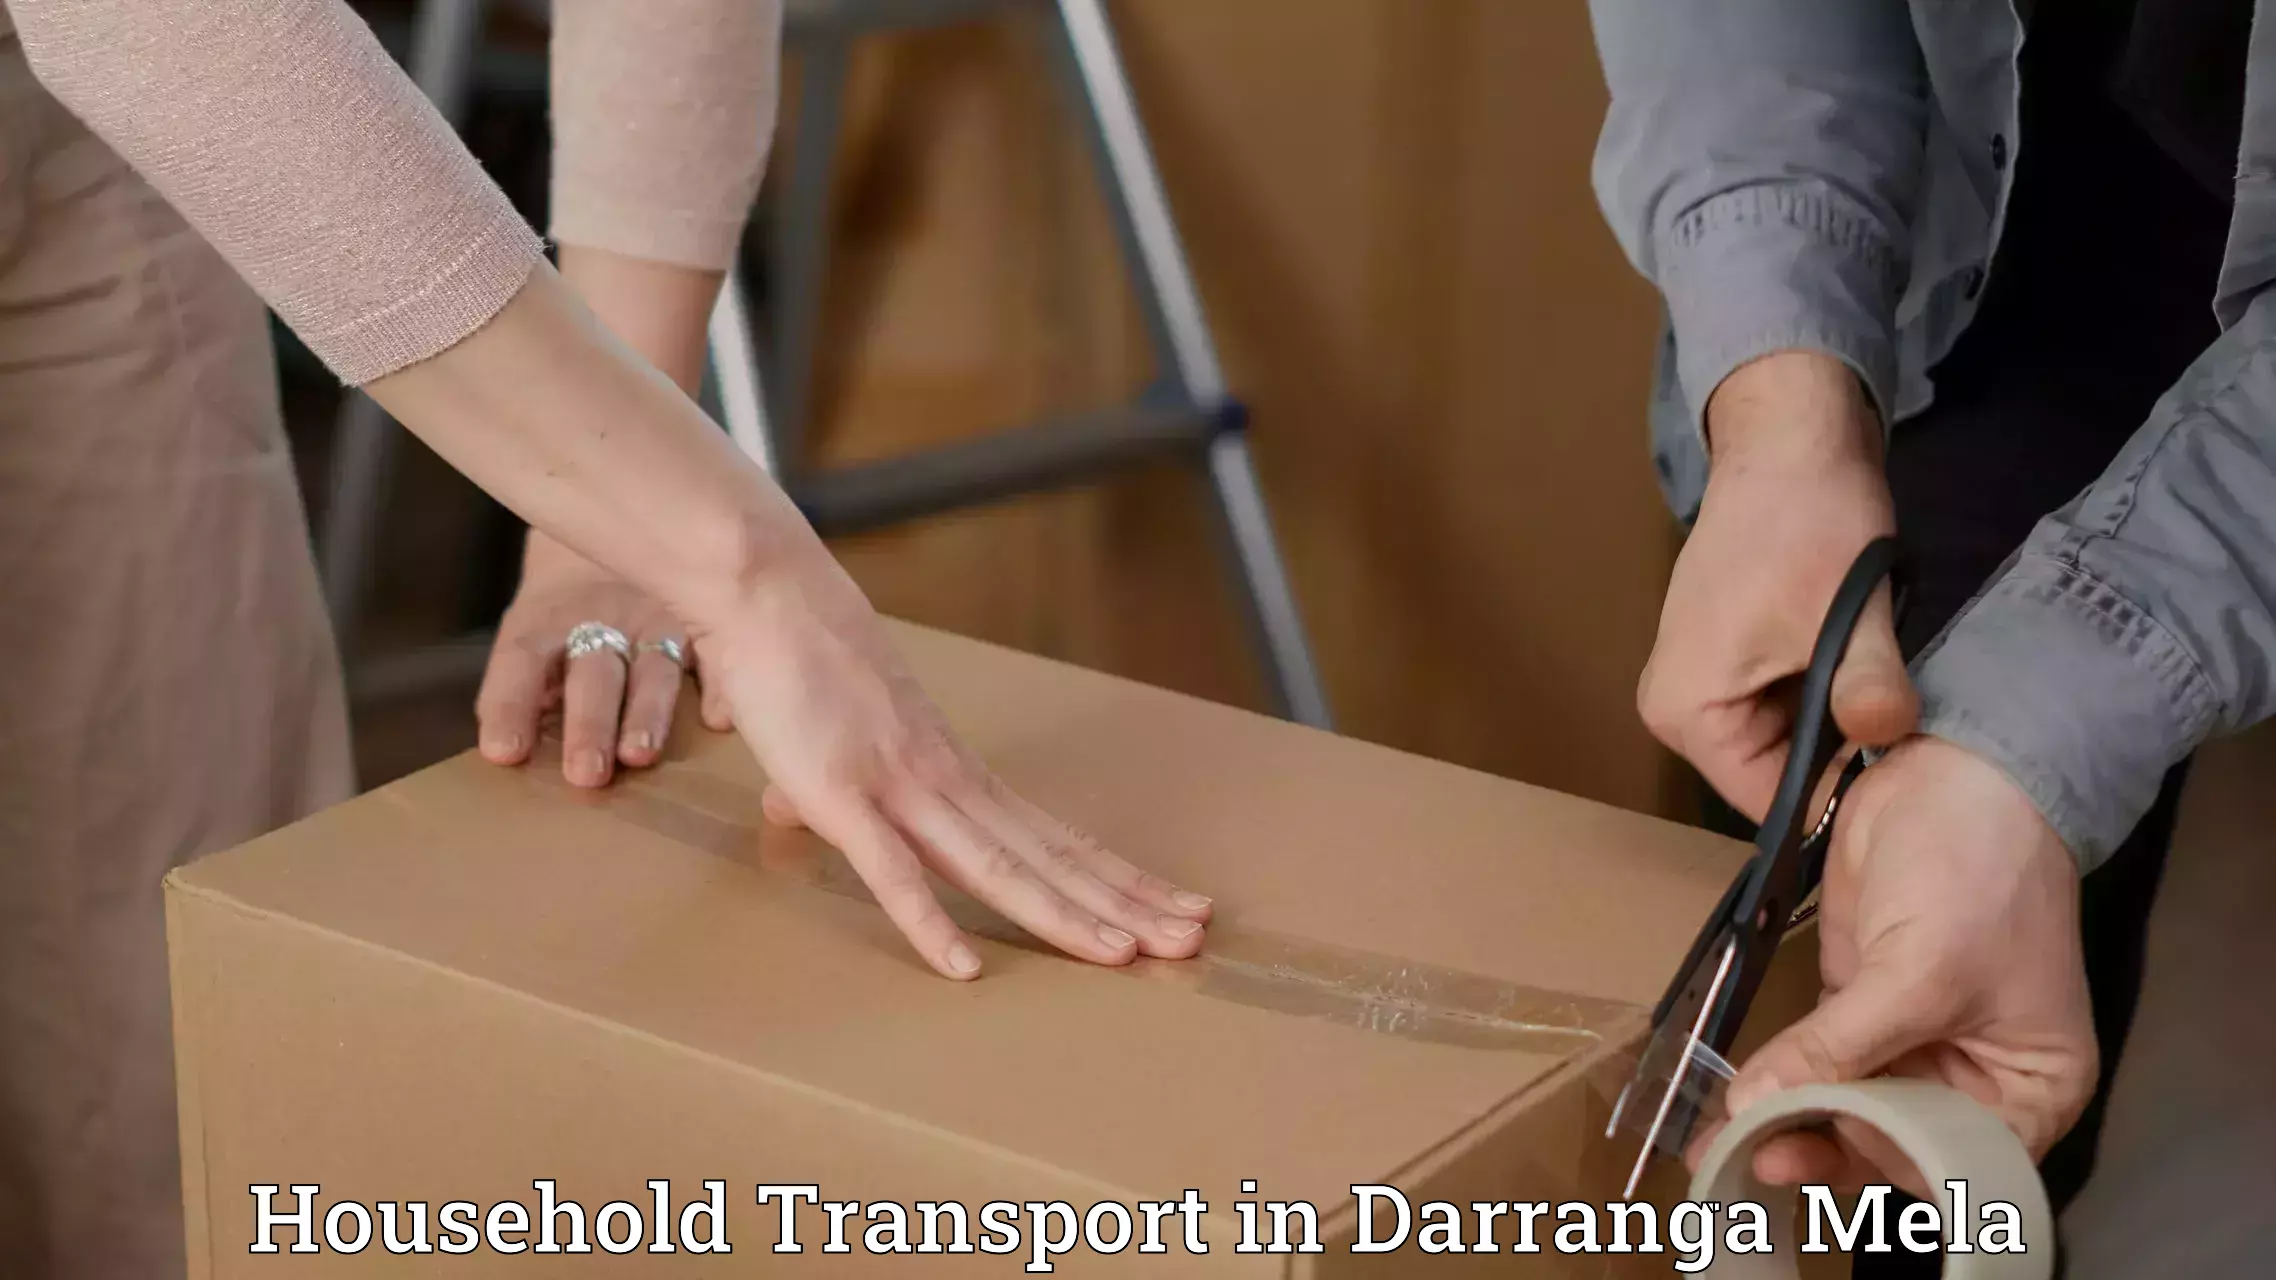 Expert furniture transport in Darranga Mela